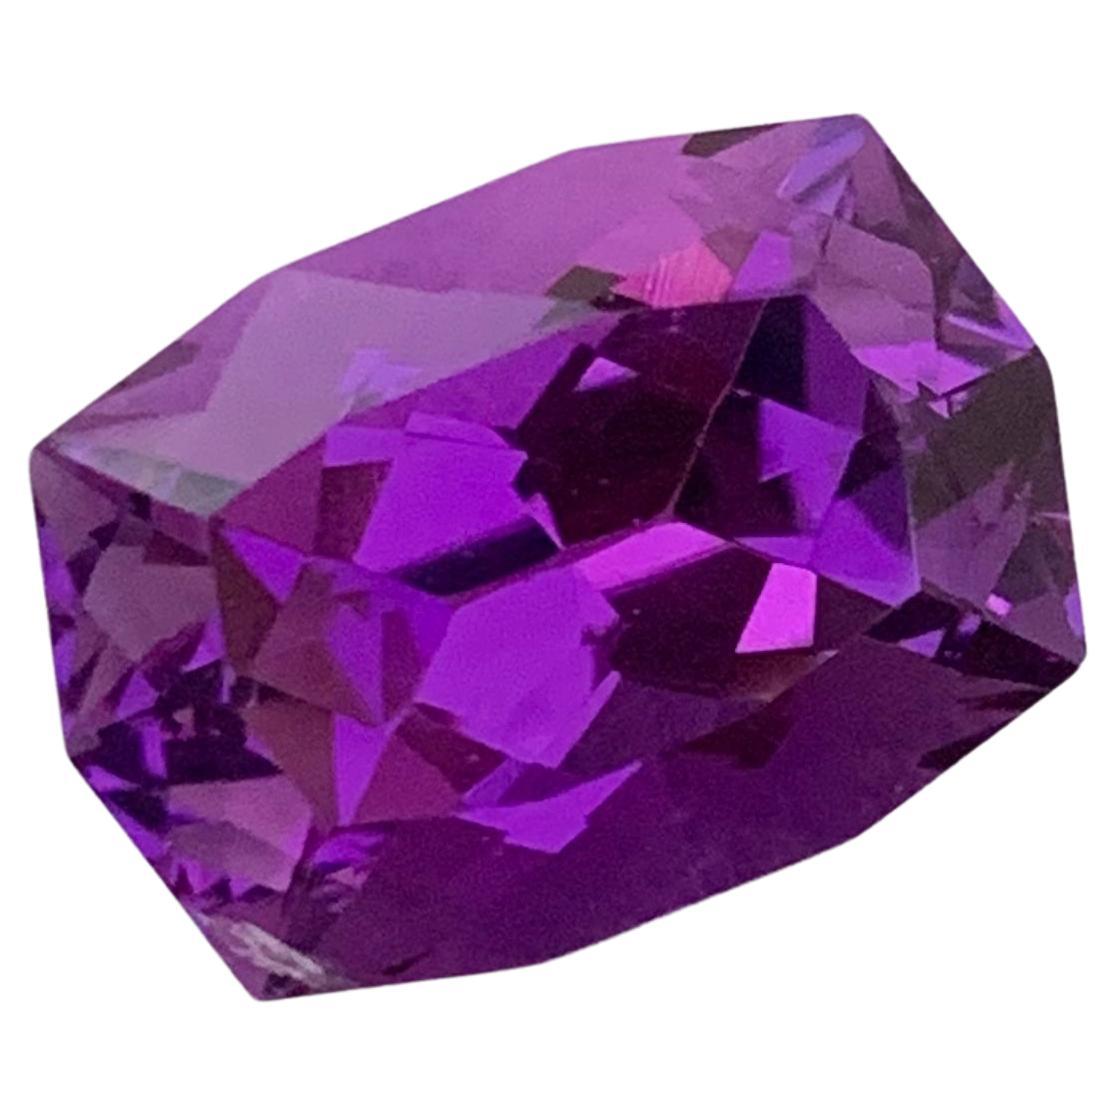 Stunning 7.85 Carats Loose Dark Purple Amethyst Ring Gem from Brazil Mine